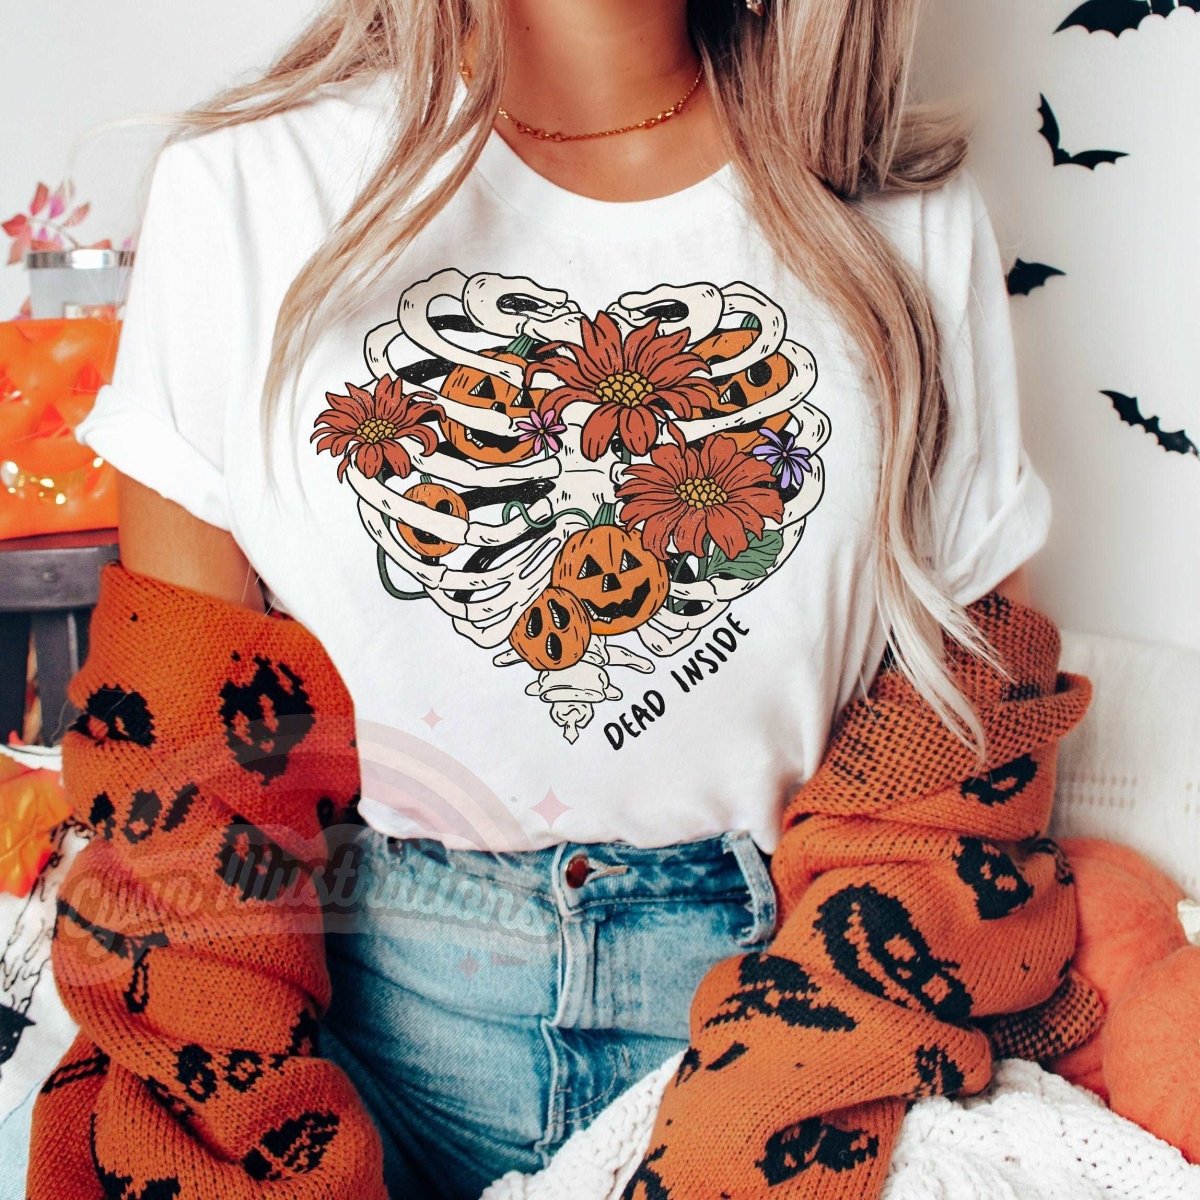 'Dead Inside' Halloween Skull Tshirt - T-shirts - Kinder Planet Company